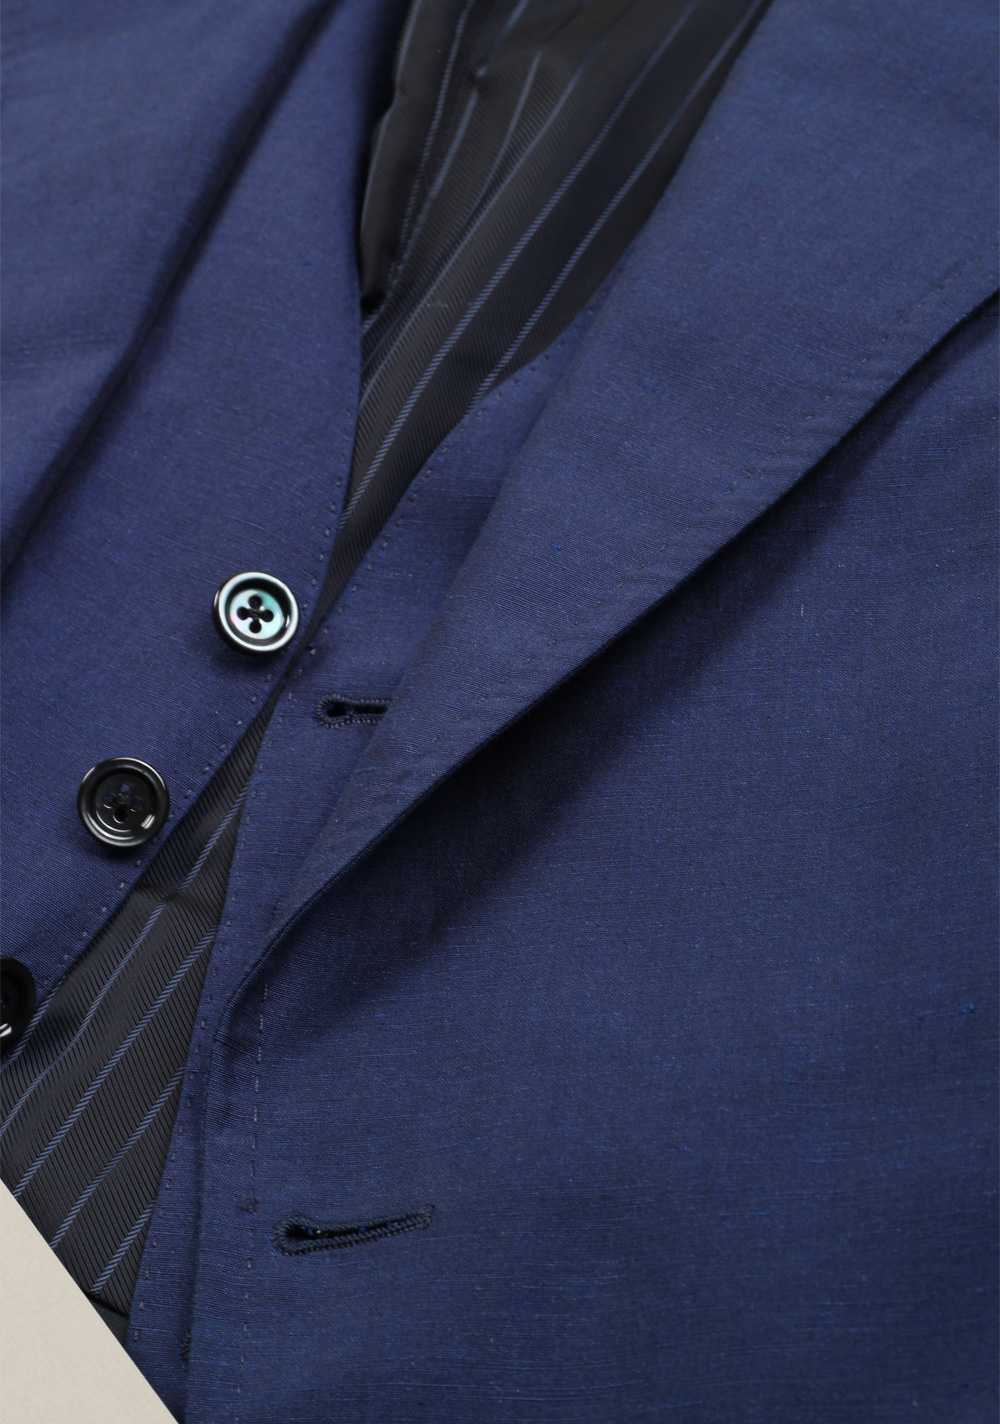 TOM FORD Shelton Blue 3 Piece Suit Size 48 / 38R U.S. In Linen Silk ...